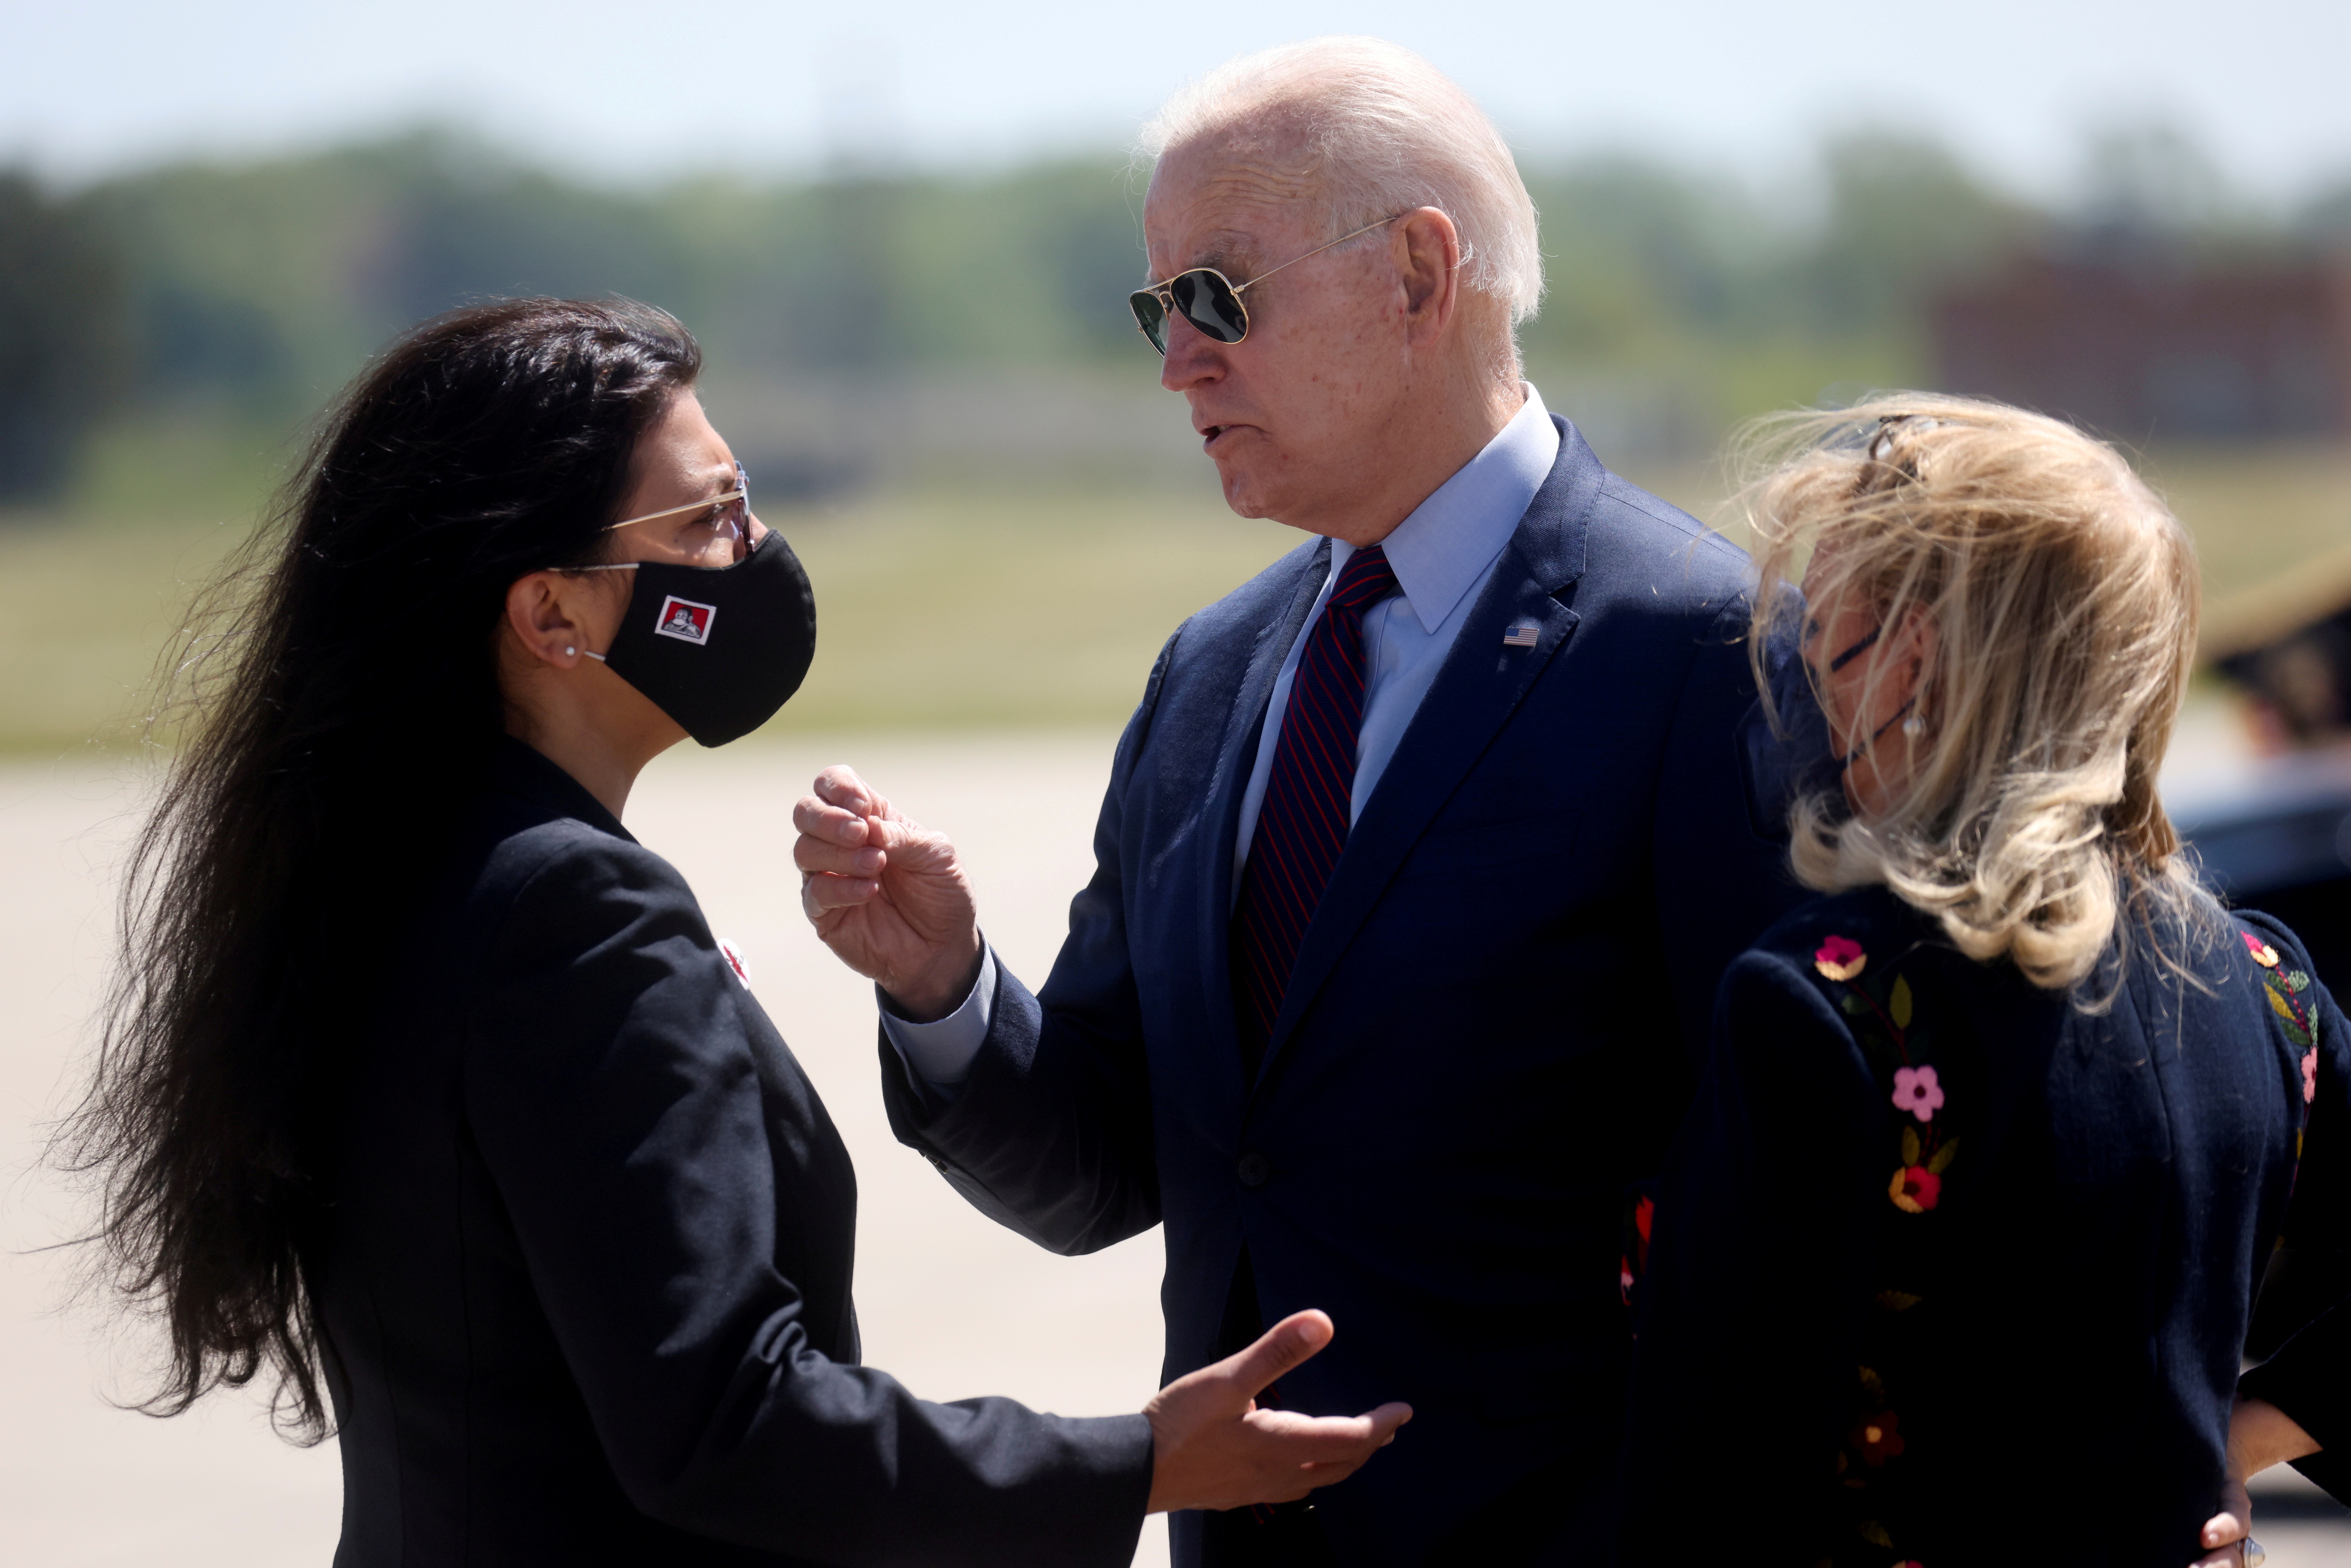 U.S. President Joe Biden is greeted by U.S. Rep. Debbie Dingell (D-MI) and U.S. Rep. Rashida Tlaib at Detroit Metropolitan Wayne County Airport